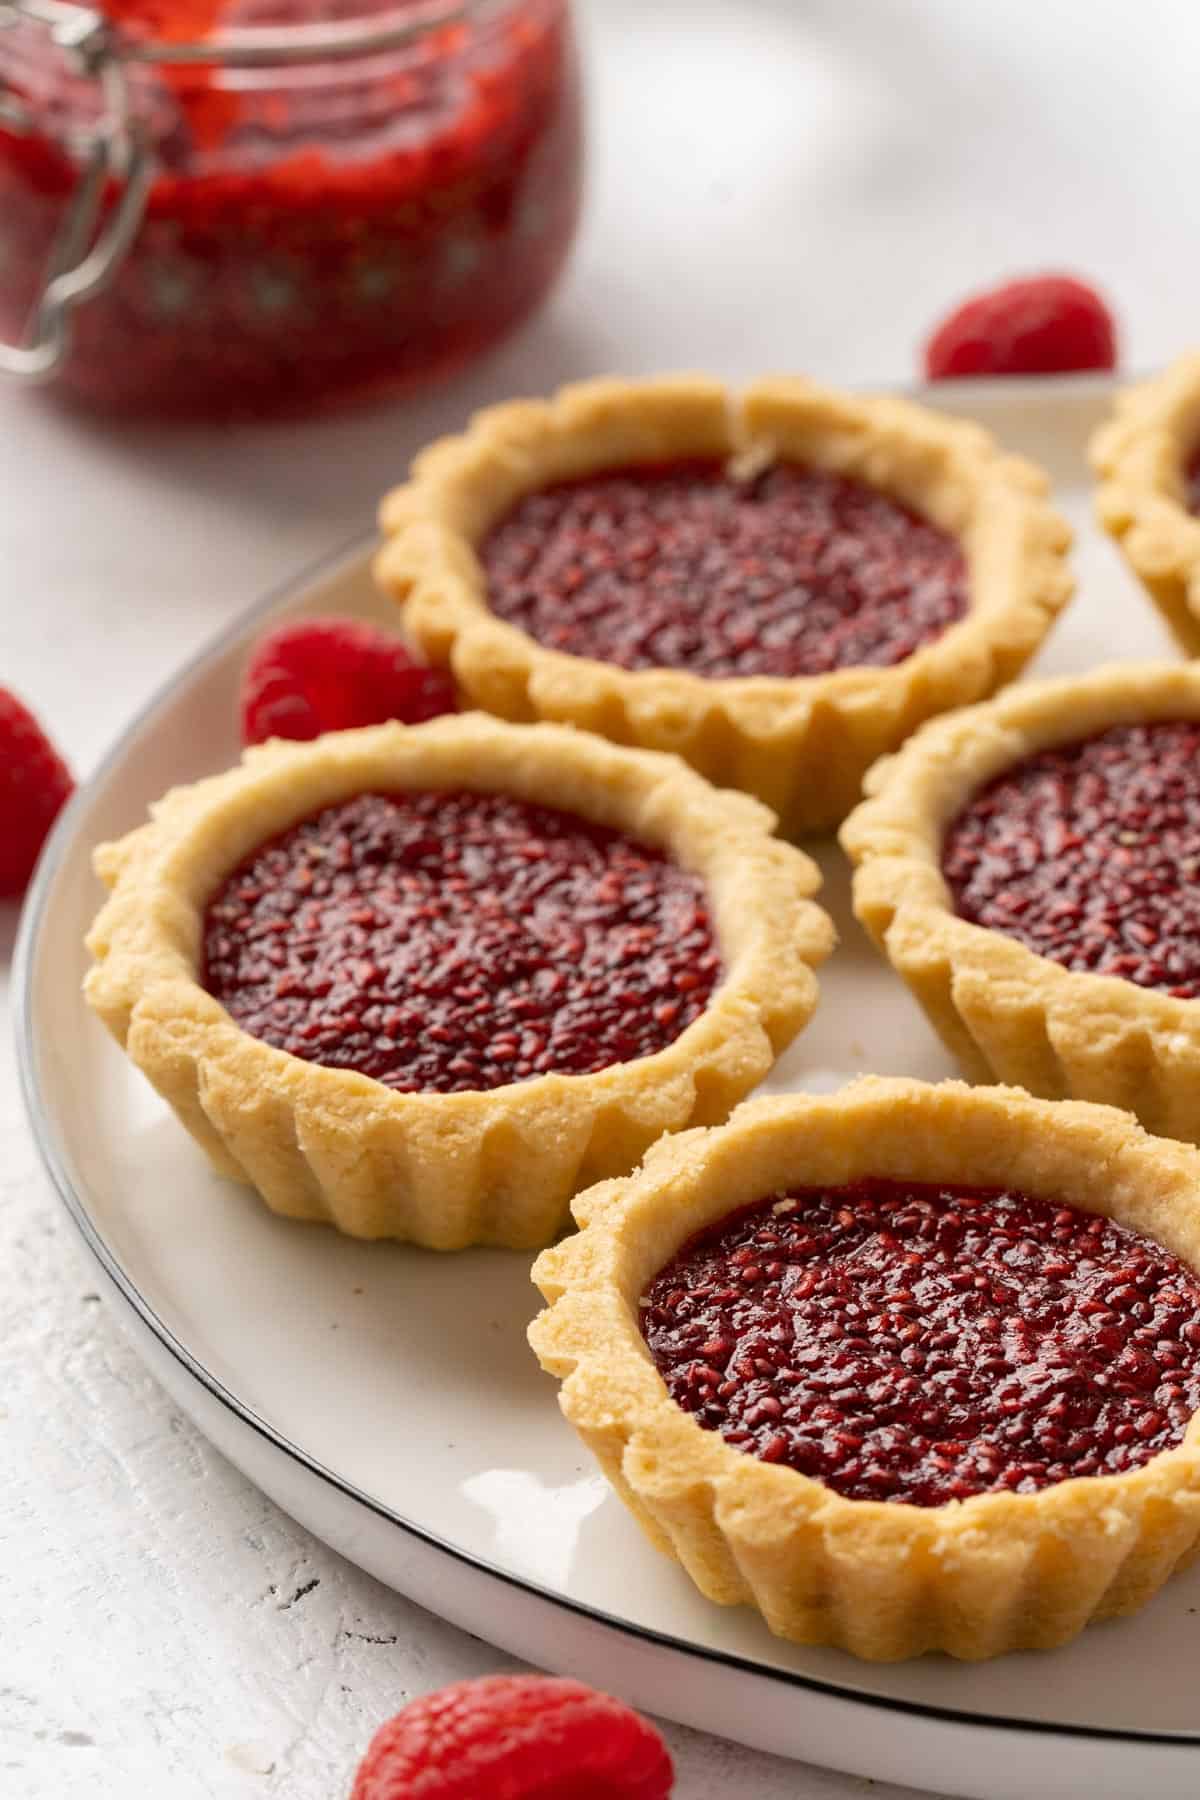 Some raspberry jam tarts on a plate.